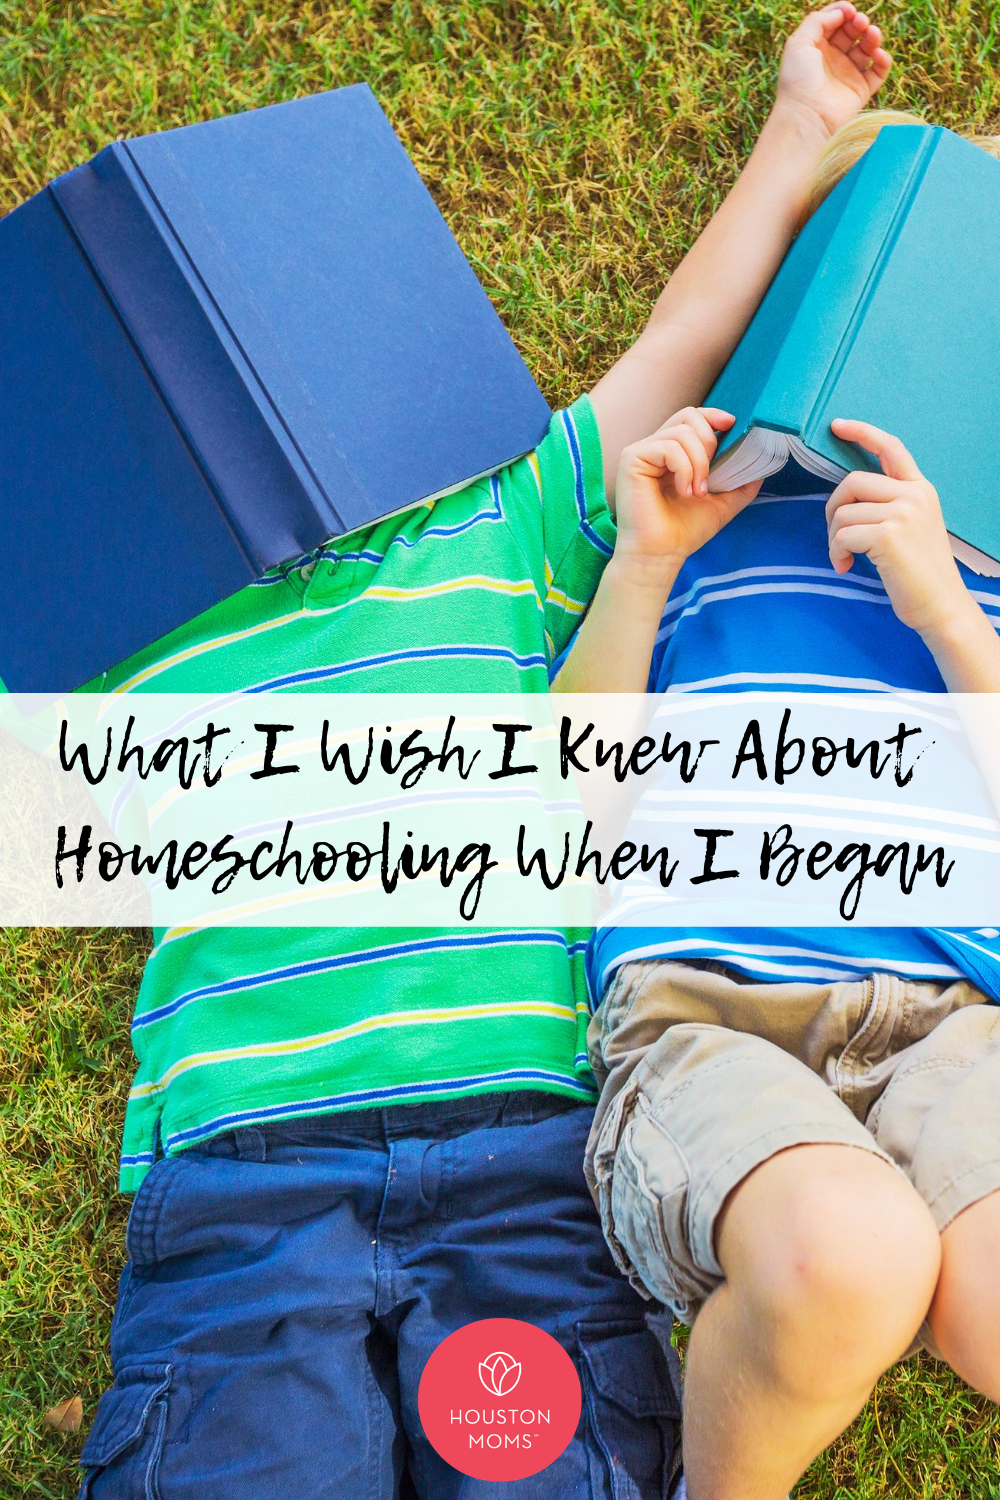 Houston Moms "What I Wish I Knew About Homeschooling When I Began" #houstonmoms #houstonmomsblog #momsaroundhouston